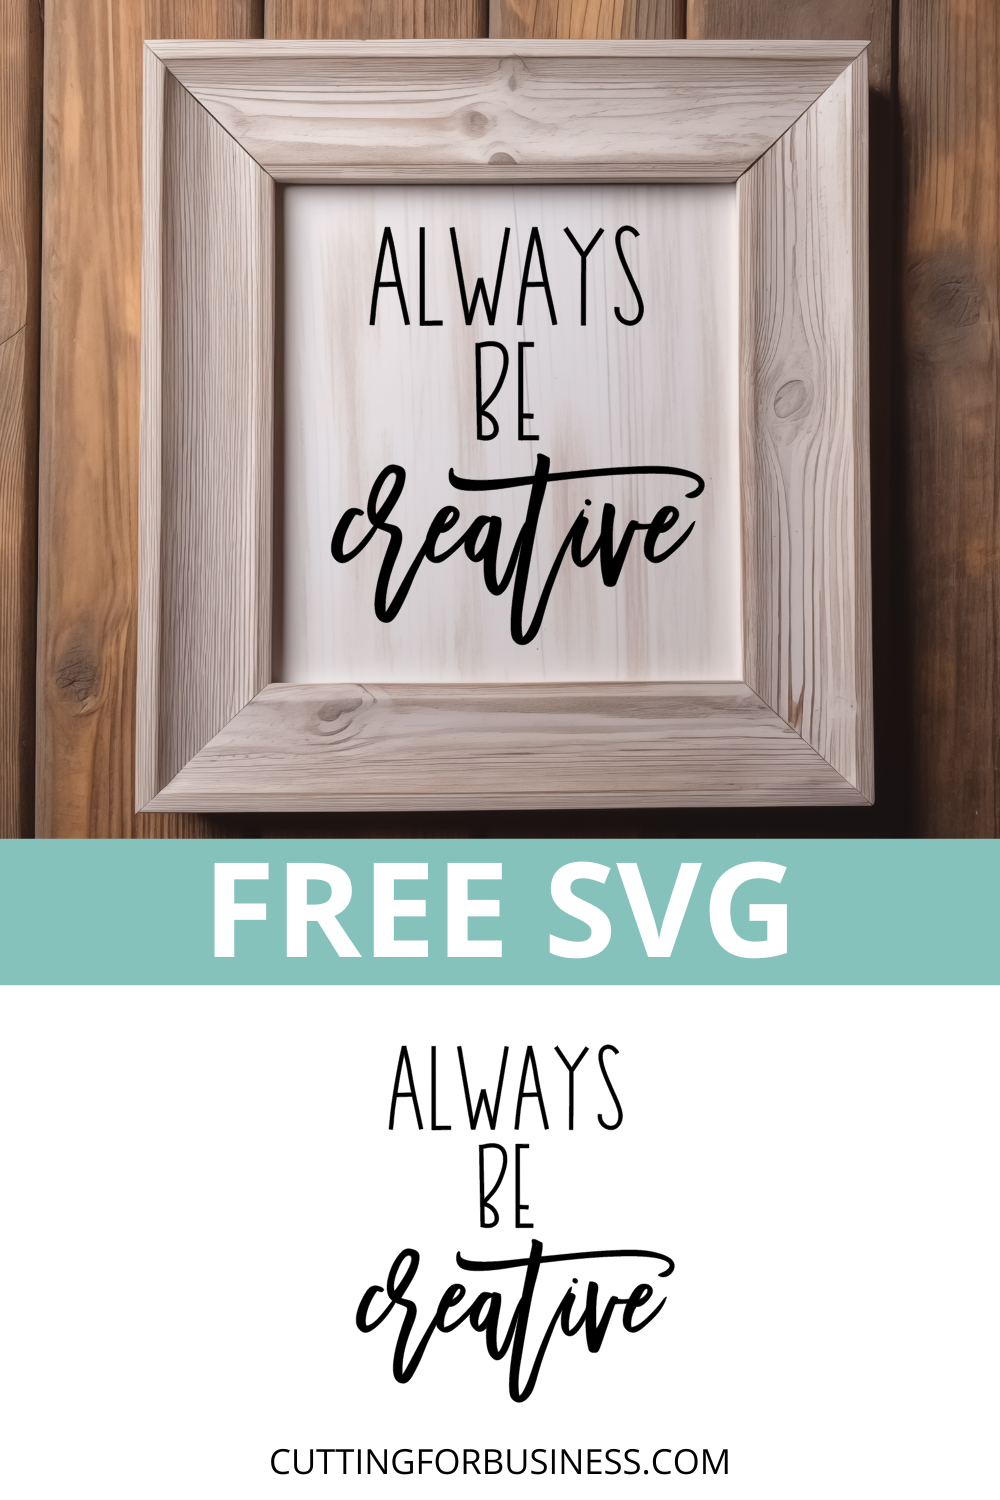 Free Always Be Creative SVG - cuttingforbusiness.com